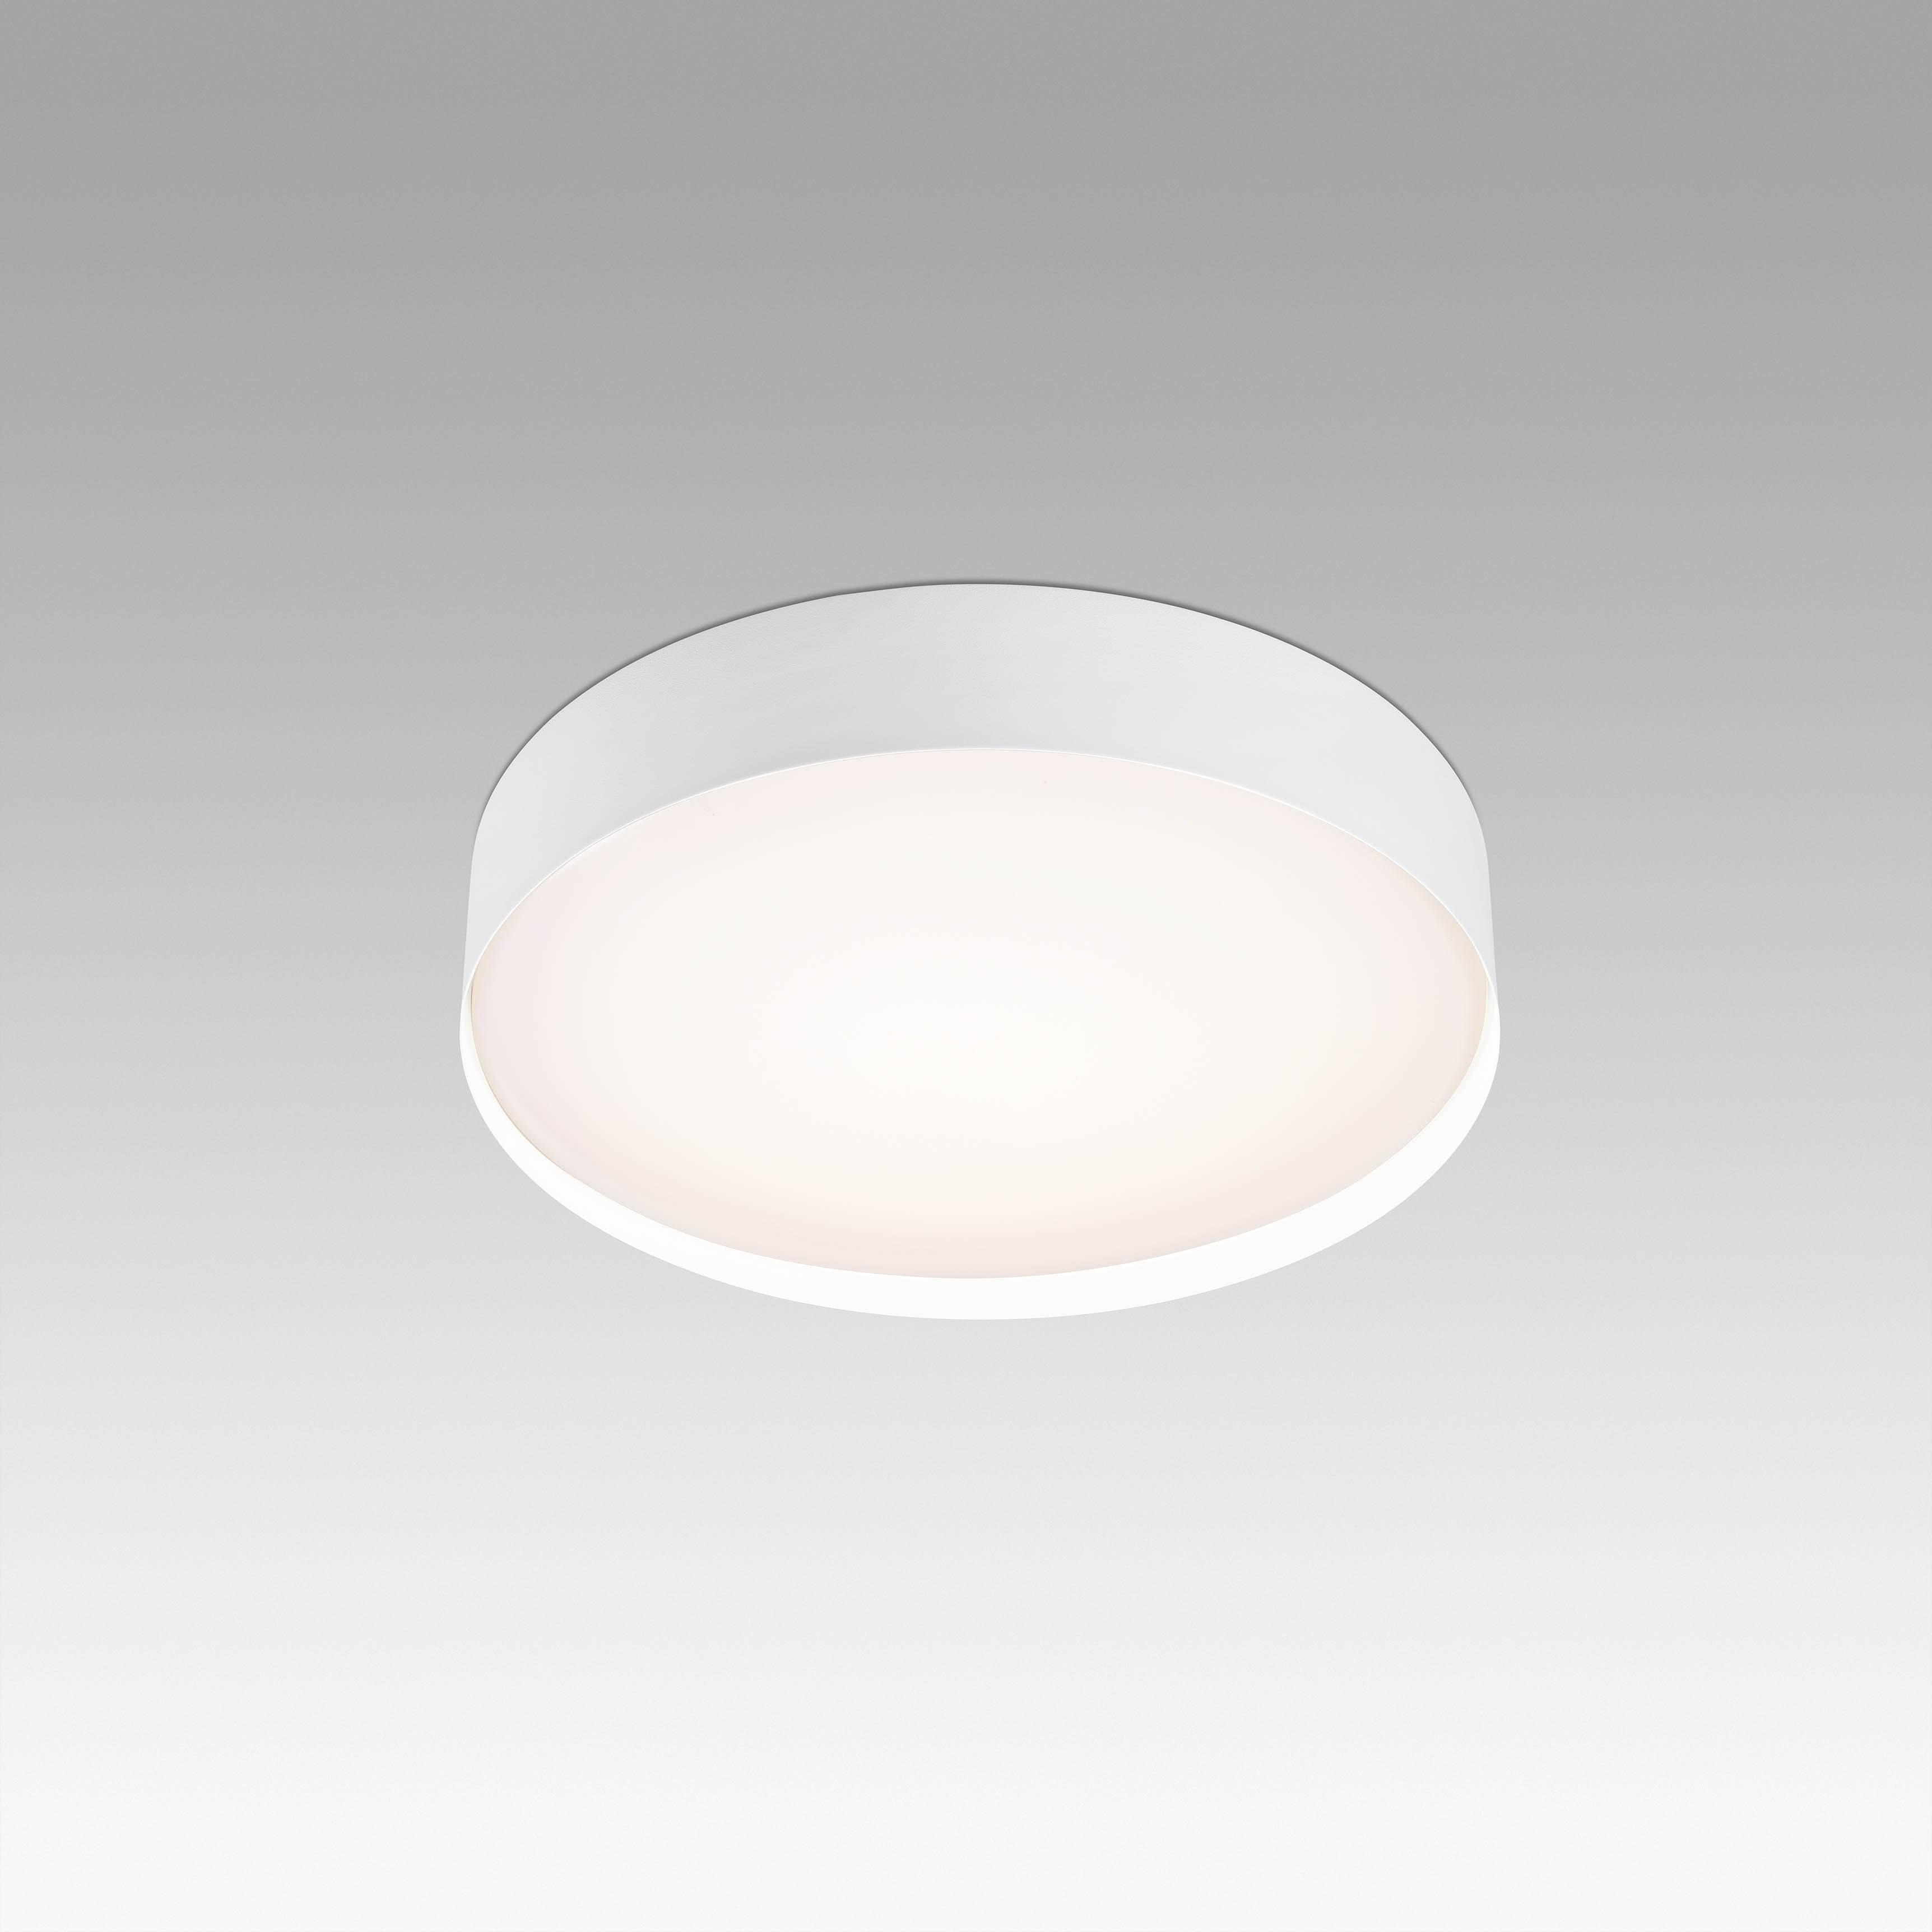 Vuk LED Round Bathroom Flush Ceiling Light White IP44 - image 1